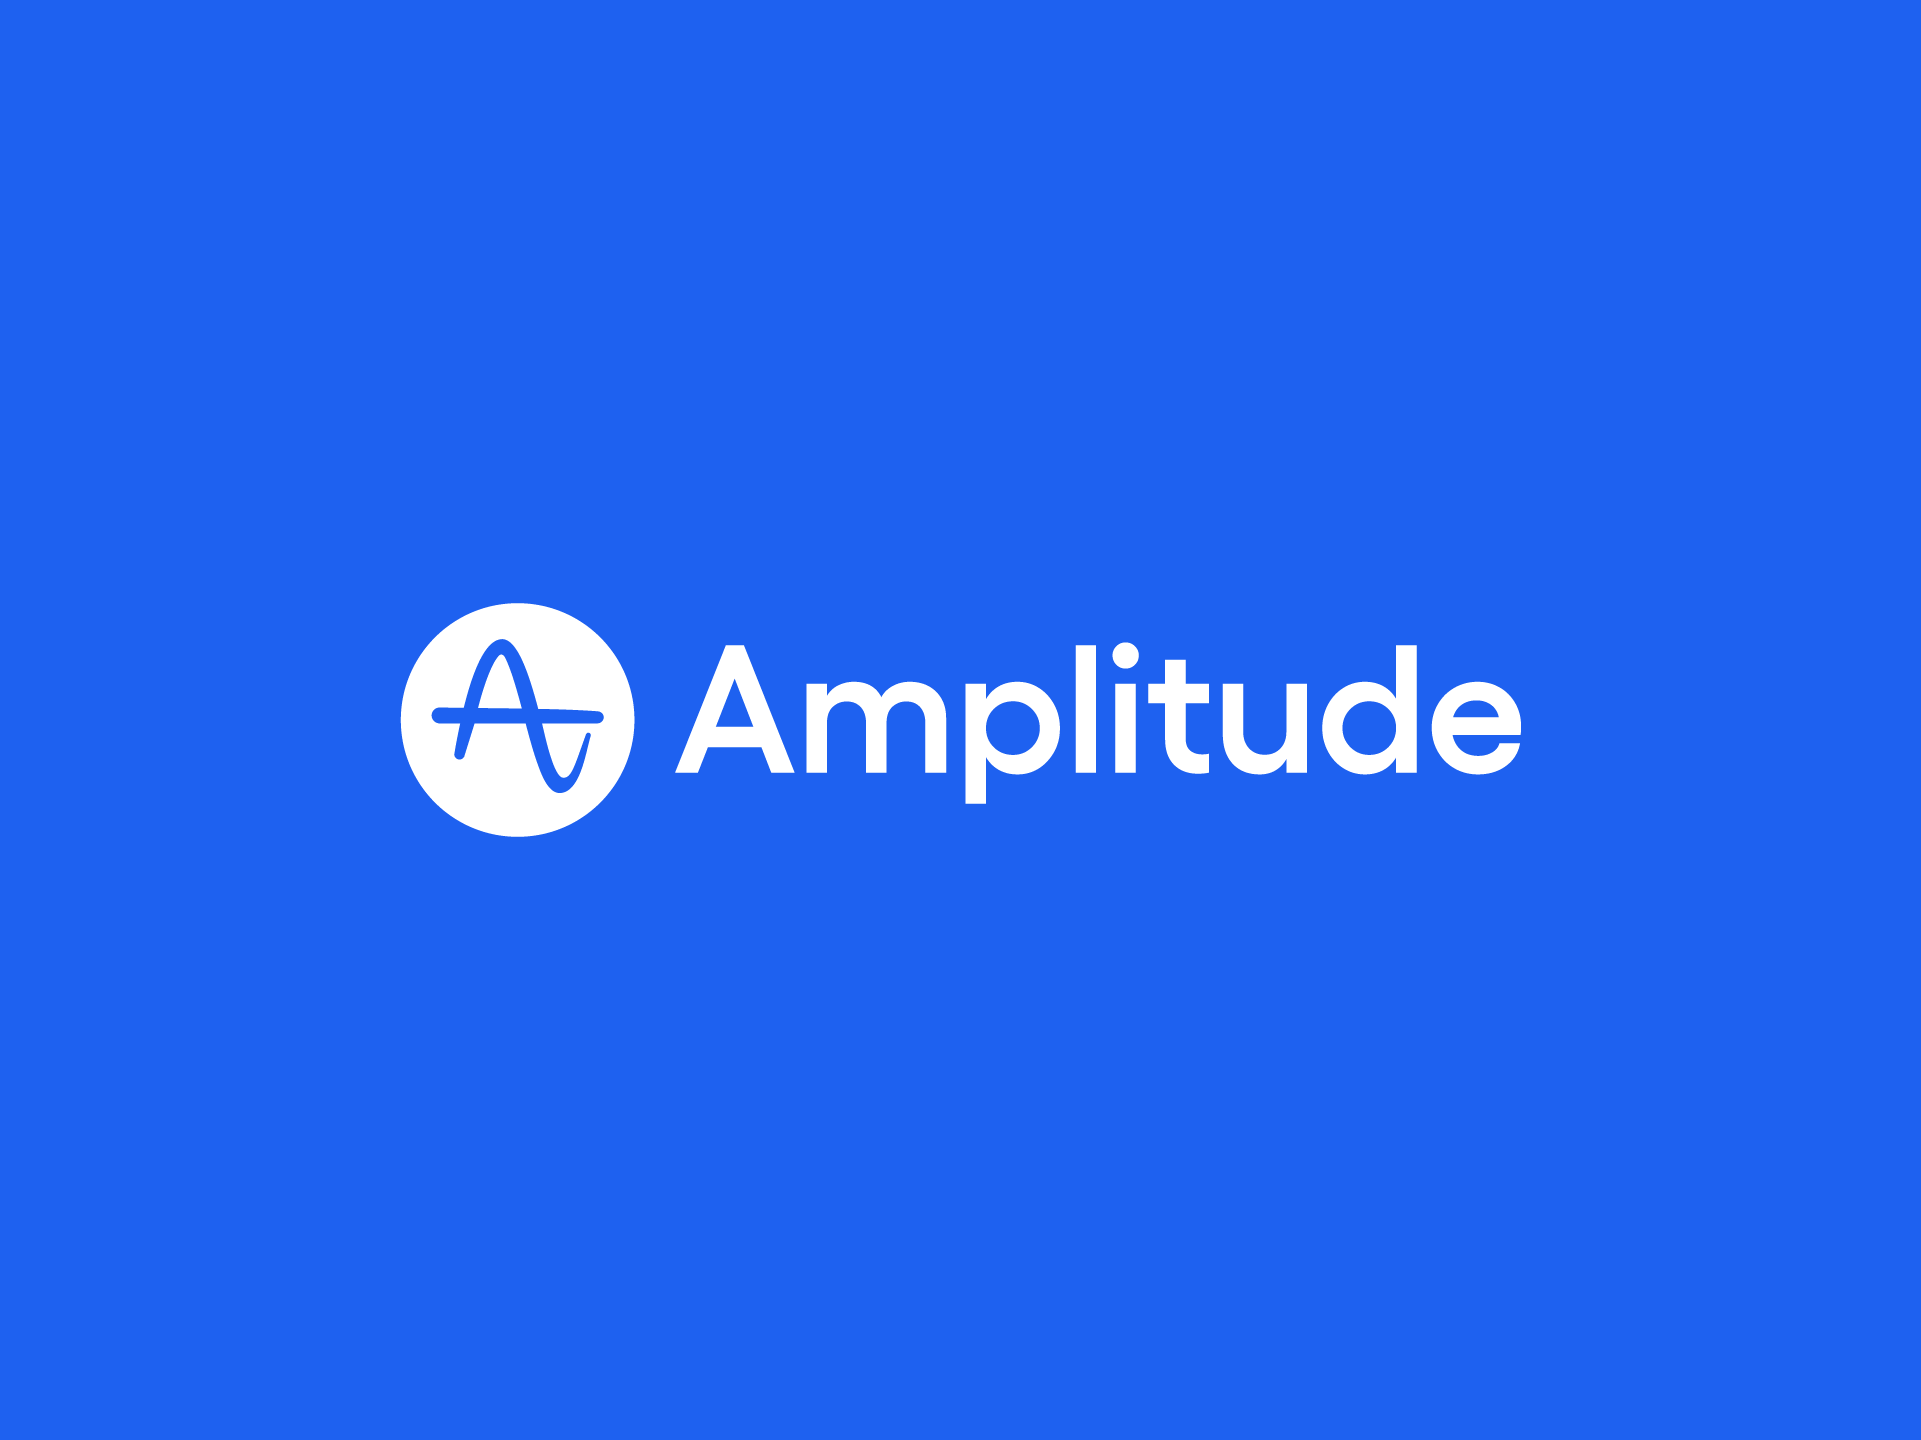 An Update on the Amplitude Team